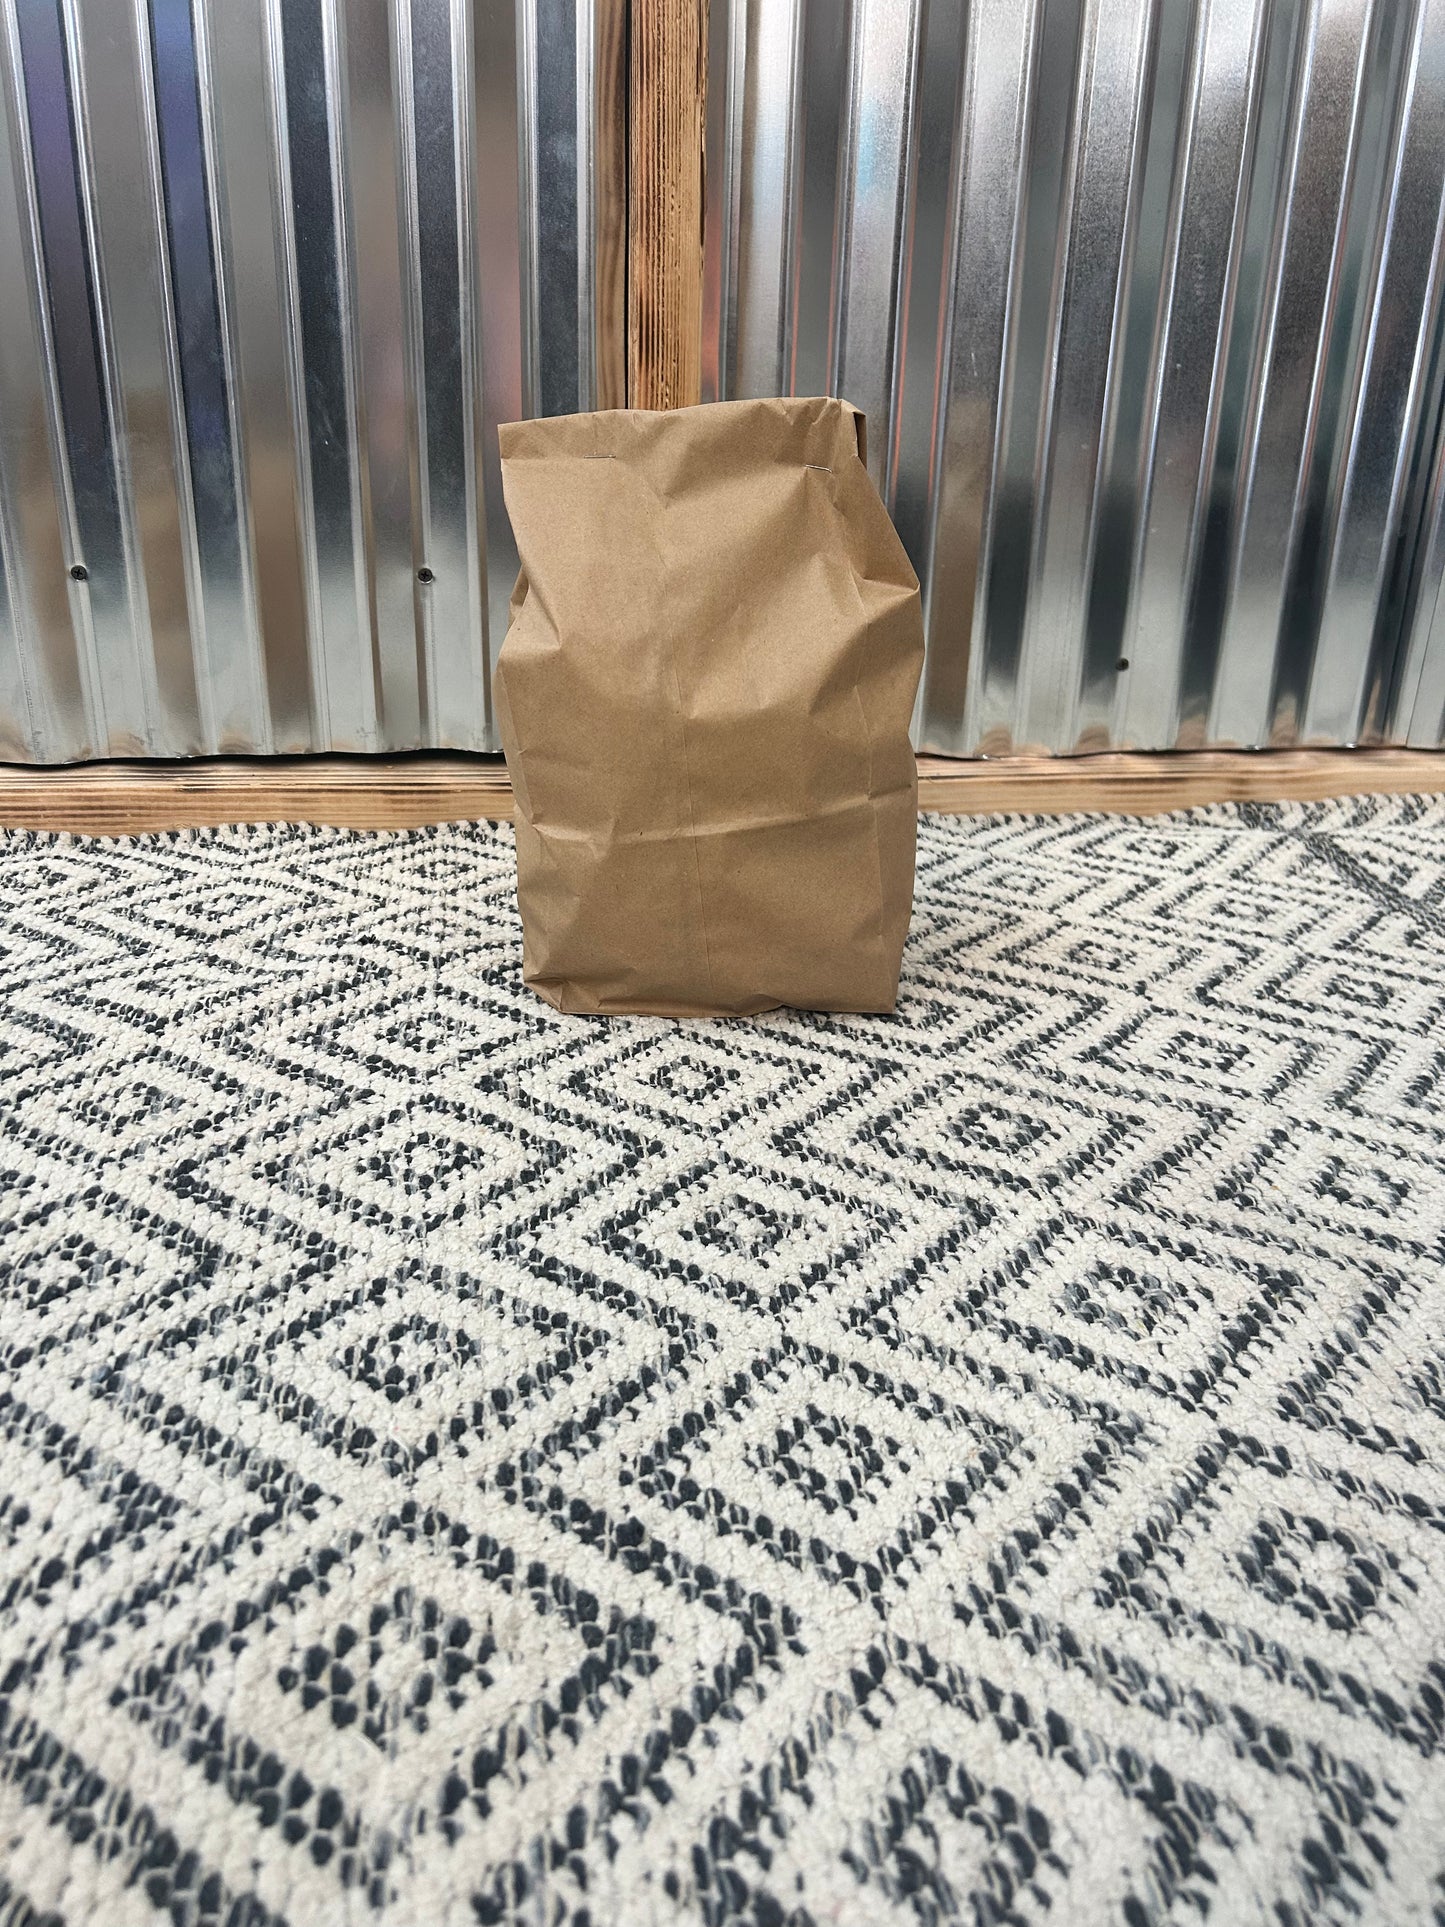 Mystery Bag #7